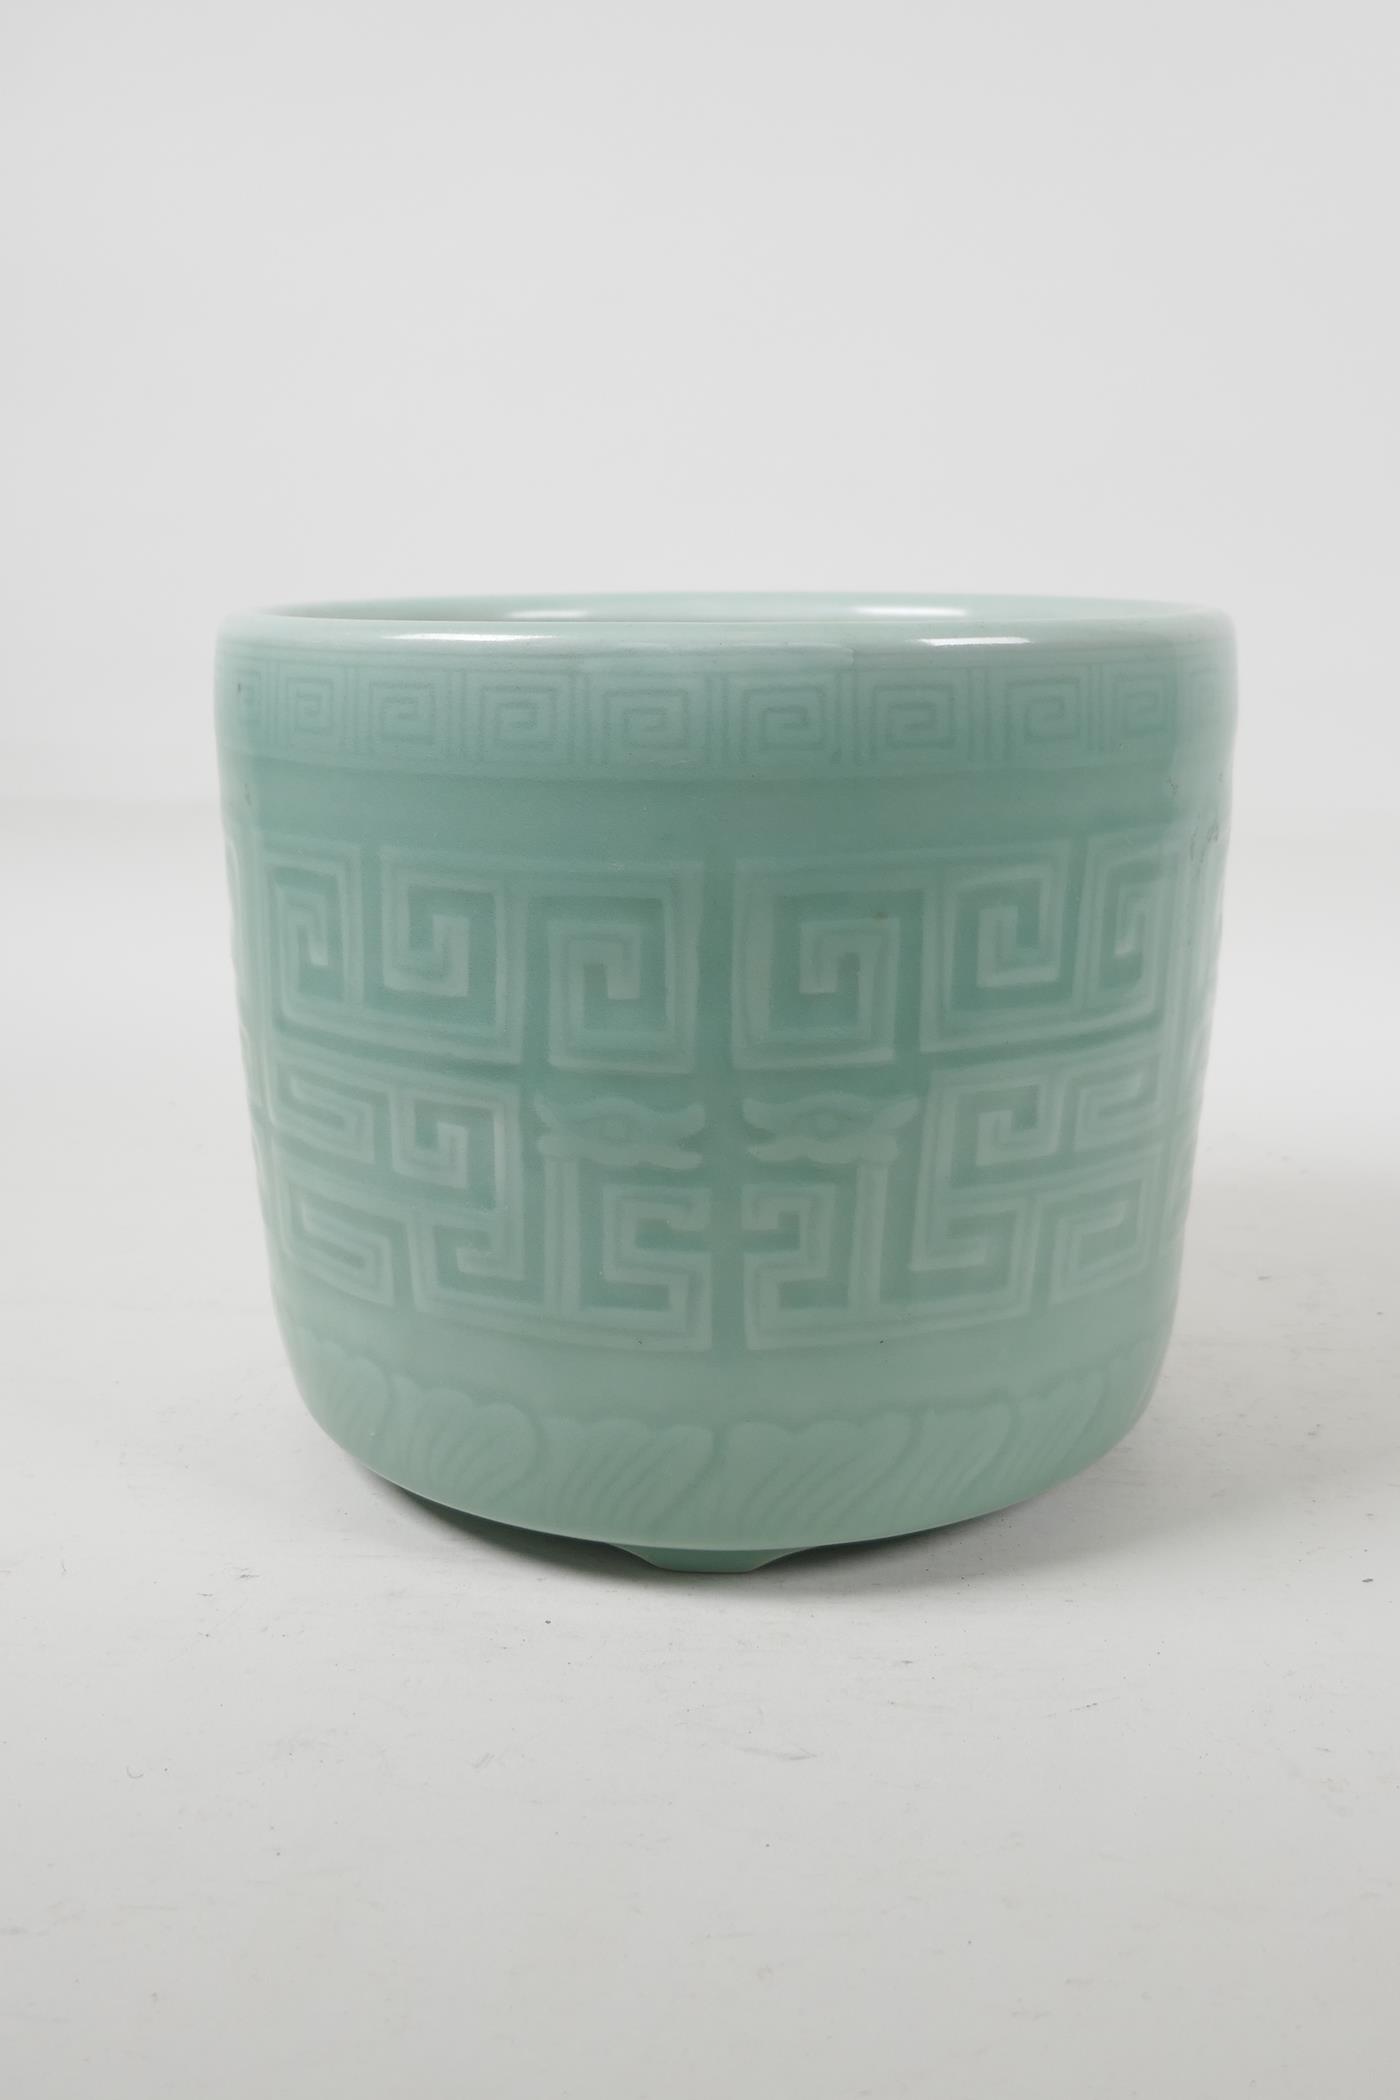 A celadon glazed porcelain brush pot with archaic style underglaze decoration, Chinese, 6½" high x - Image 2 of 4